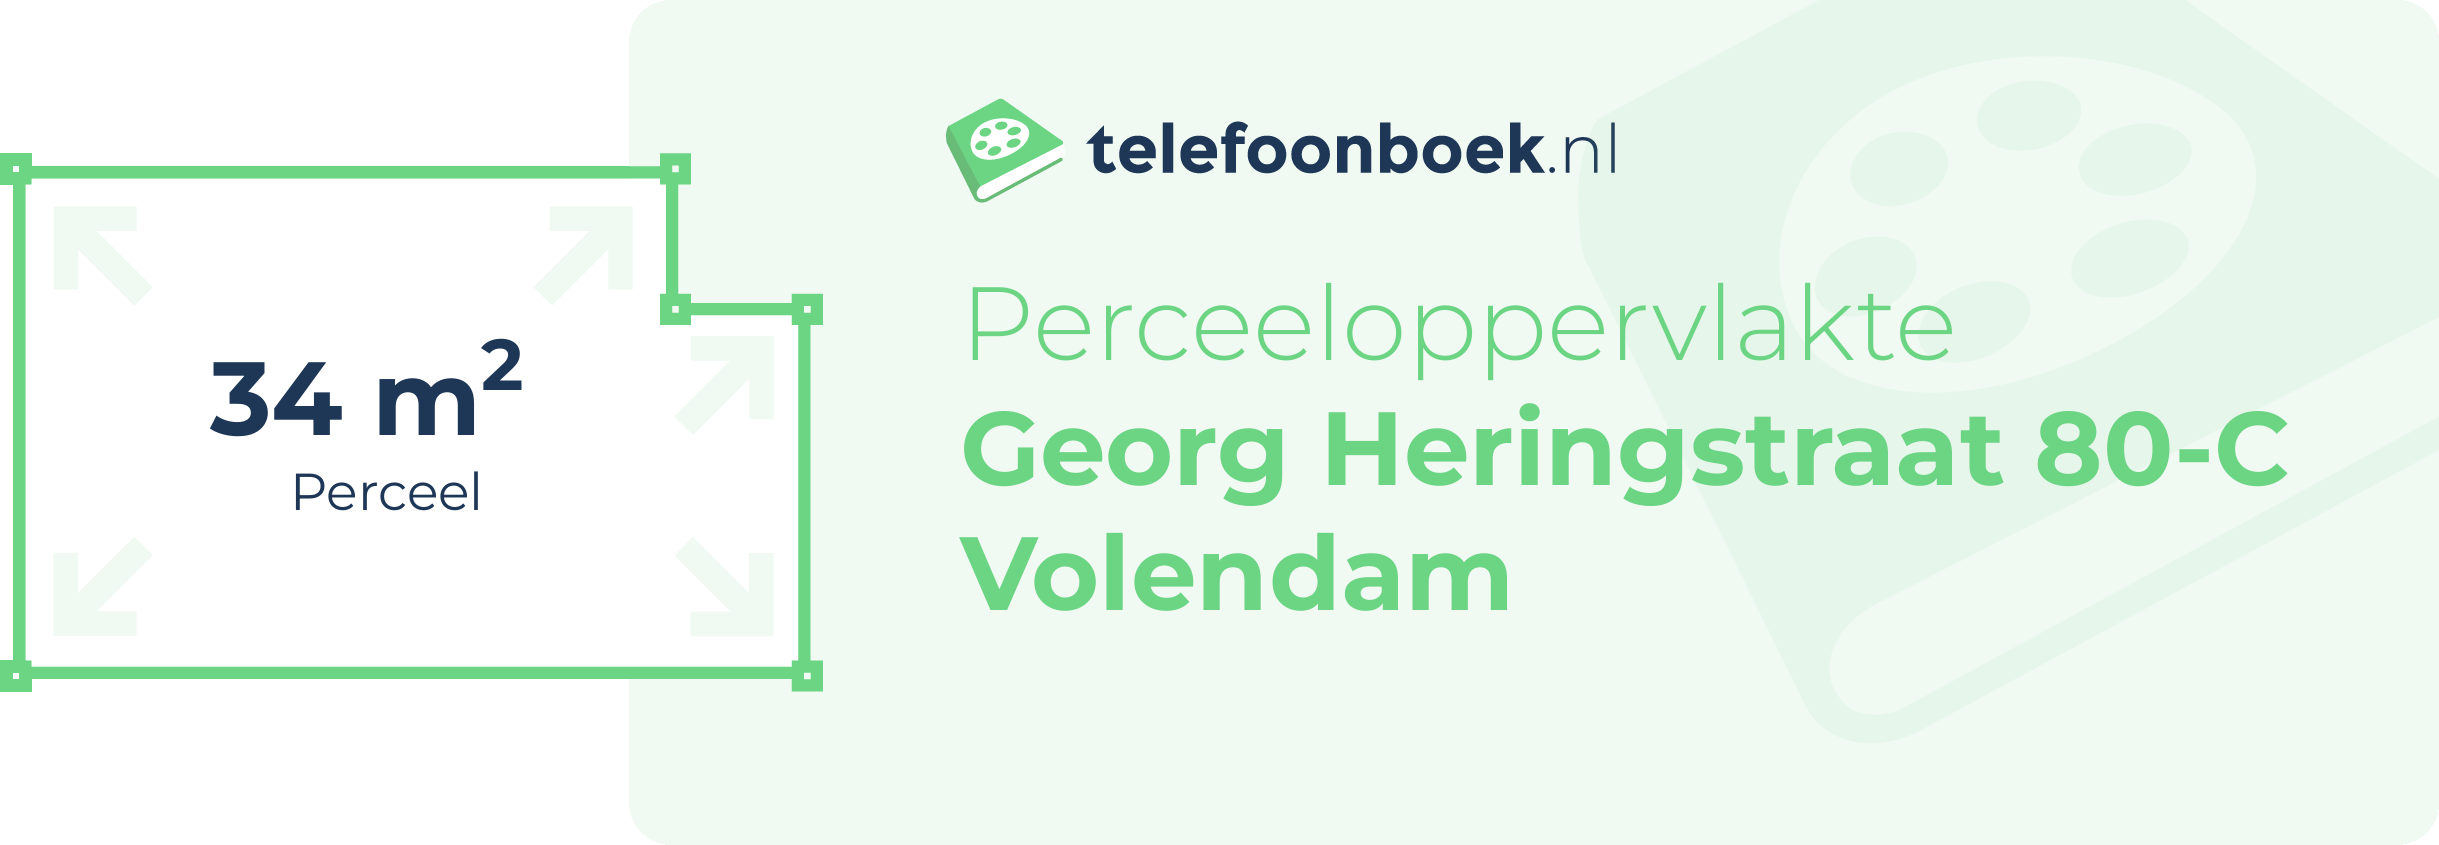 Perceeloppervlakte Georg Heringstraat 80-C Volendam